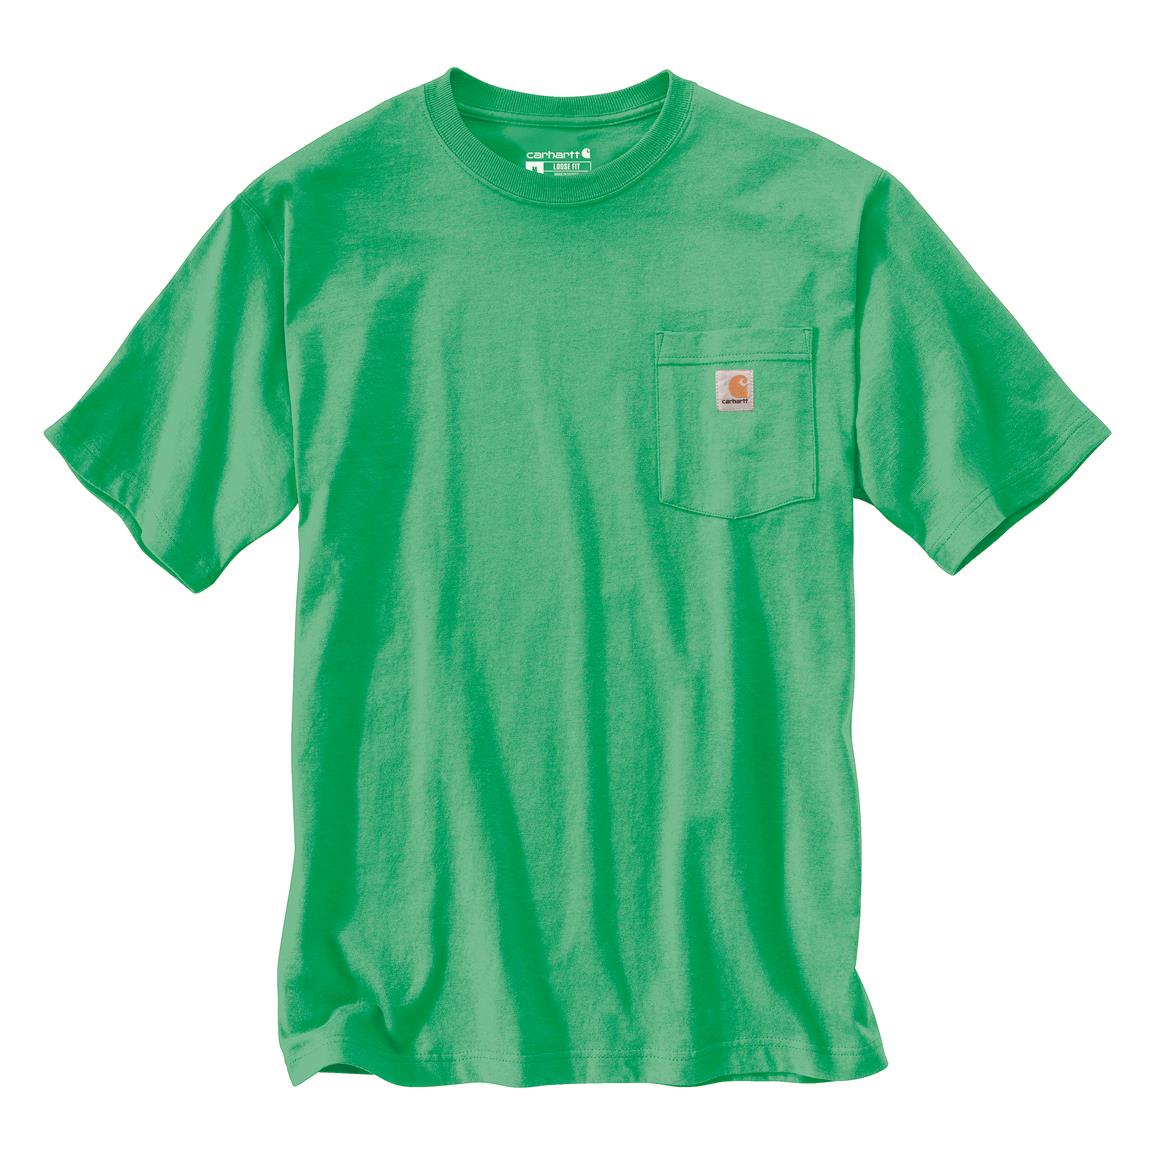 Carhartt Men's Workwear Short Sleeve Pocket Shirt, Malachite